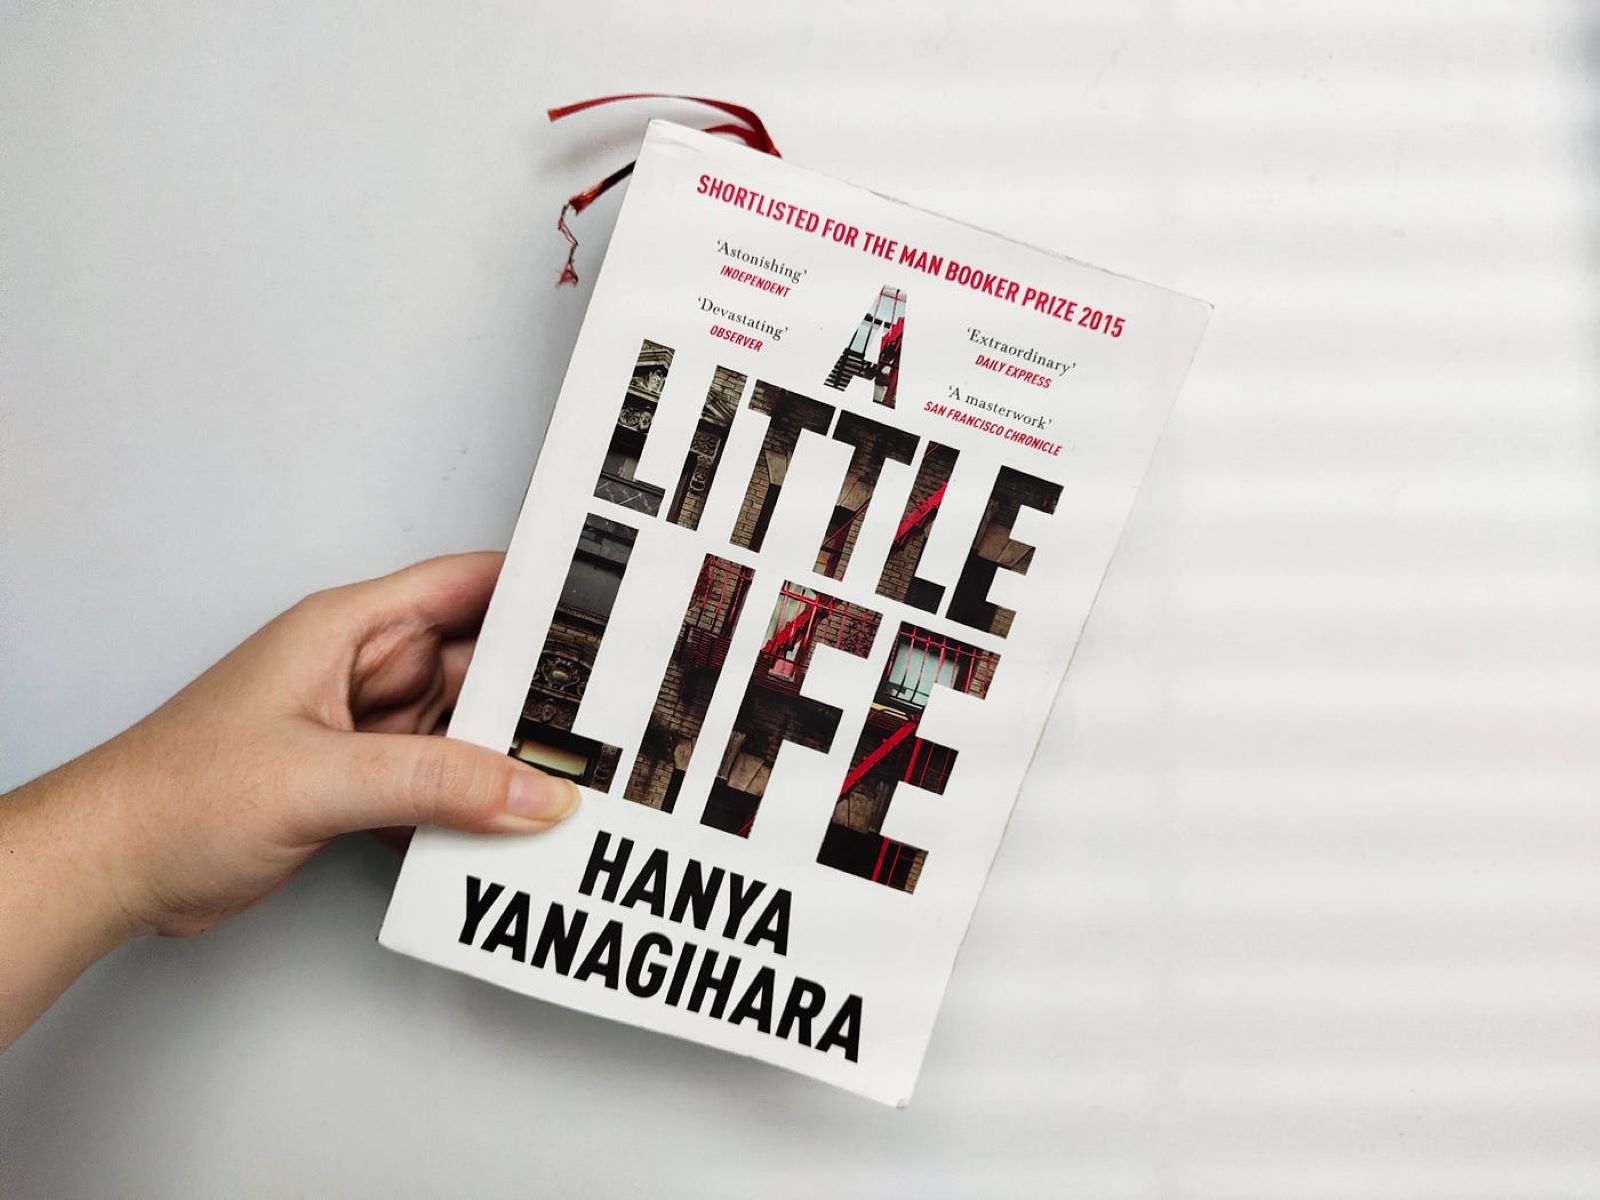 Янагихара. Маленькая жизнь Ханья Янагихара. Hanya Yanagihara a little Life краткое описание.